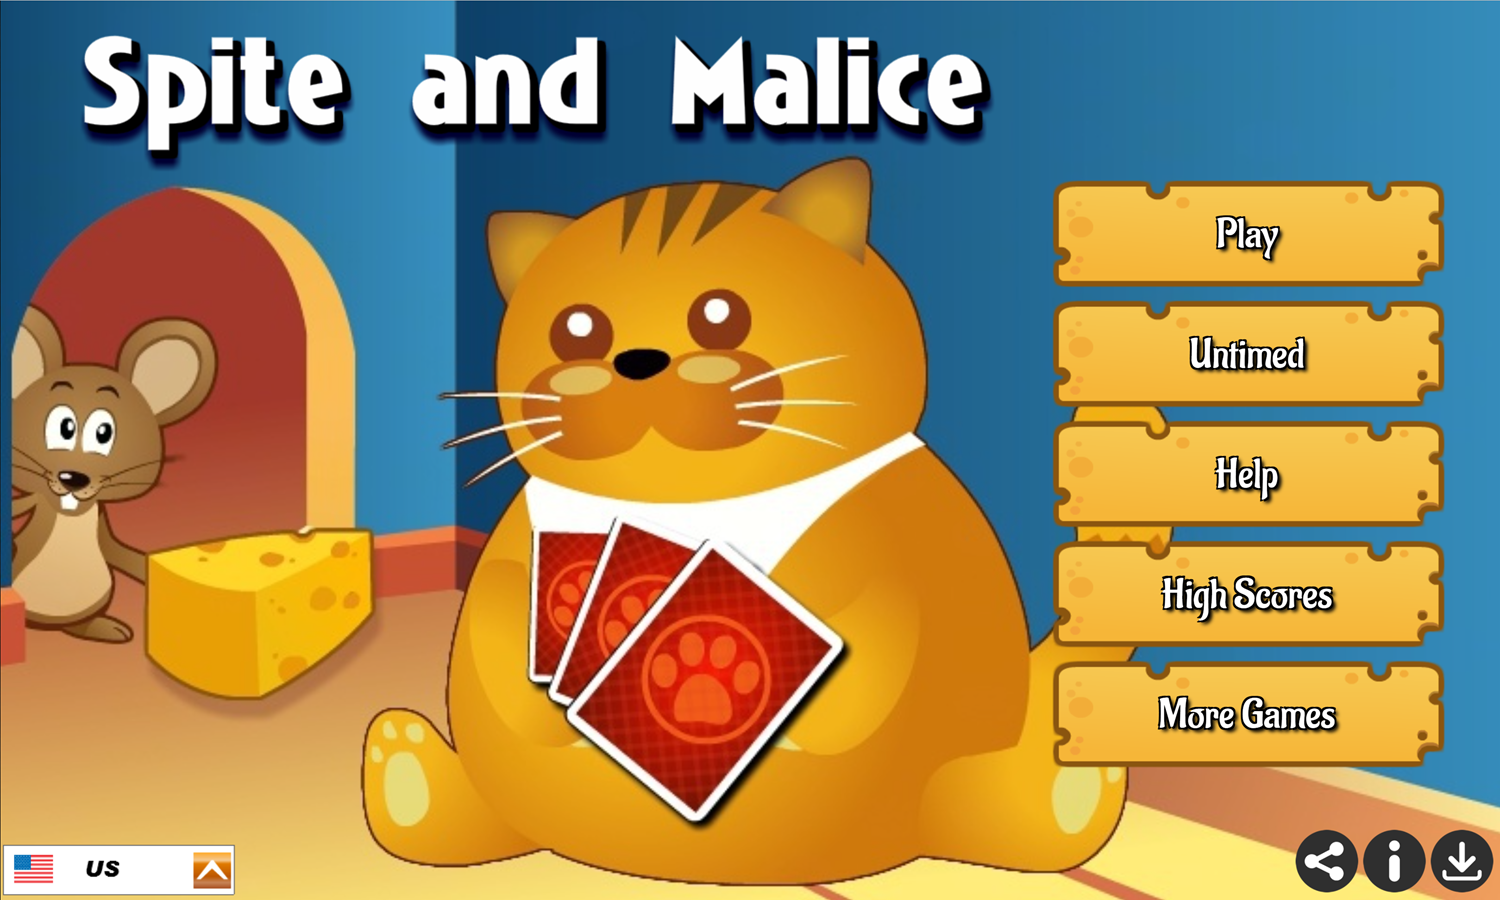 Spite and Malice Game Welcome Screen Screenshot.